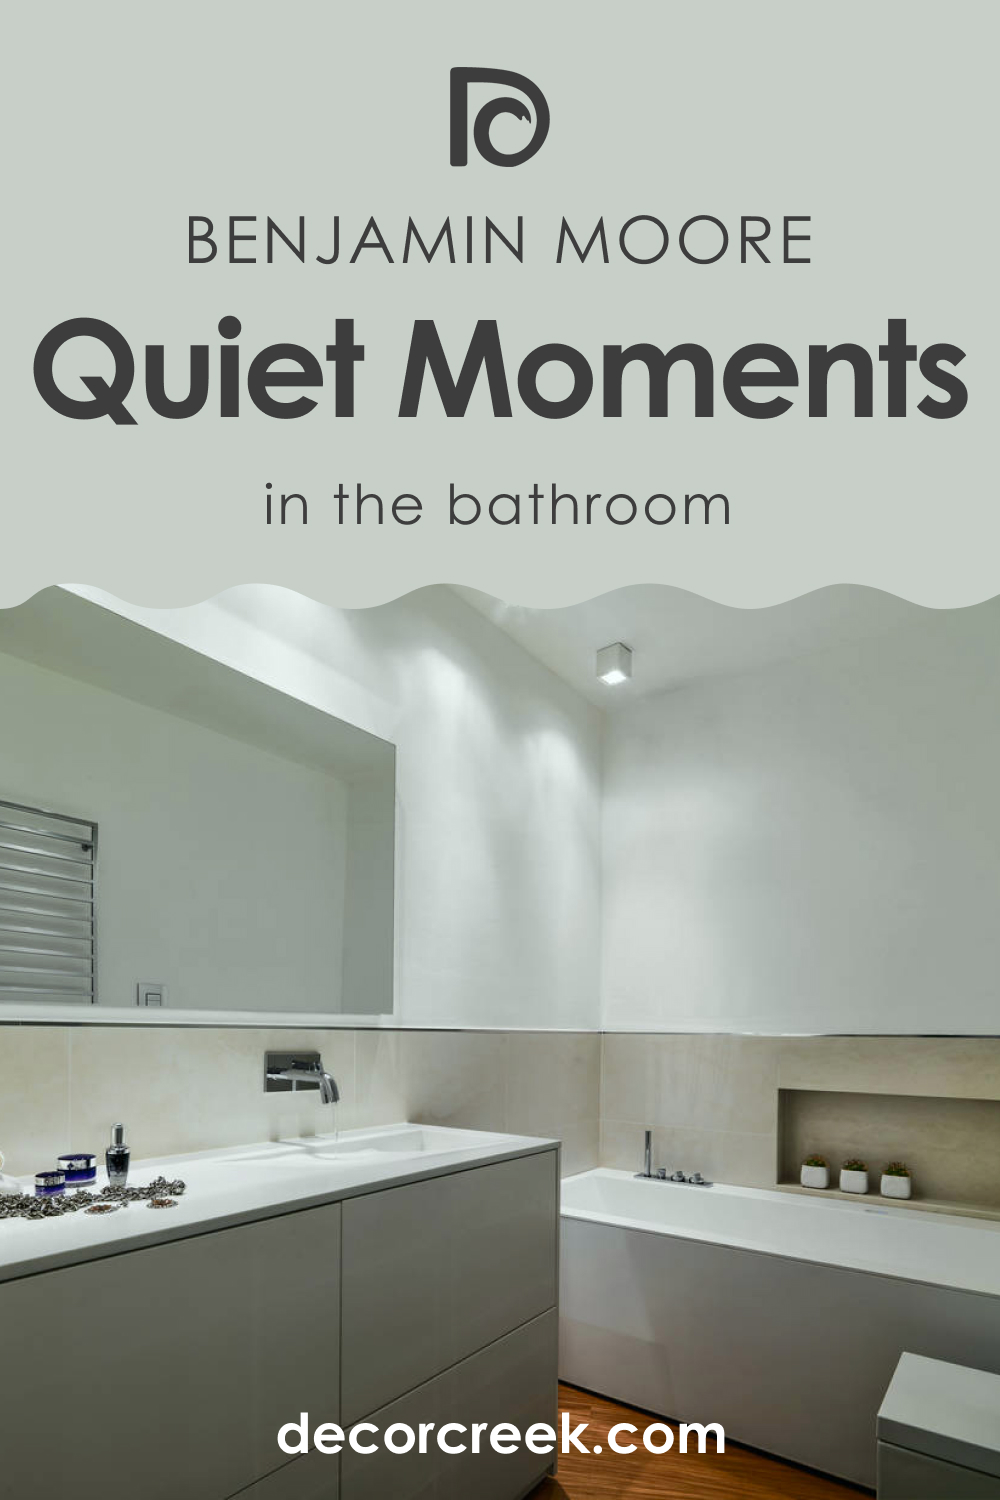 BM Quiet Moments on the Bathroom